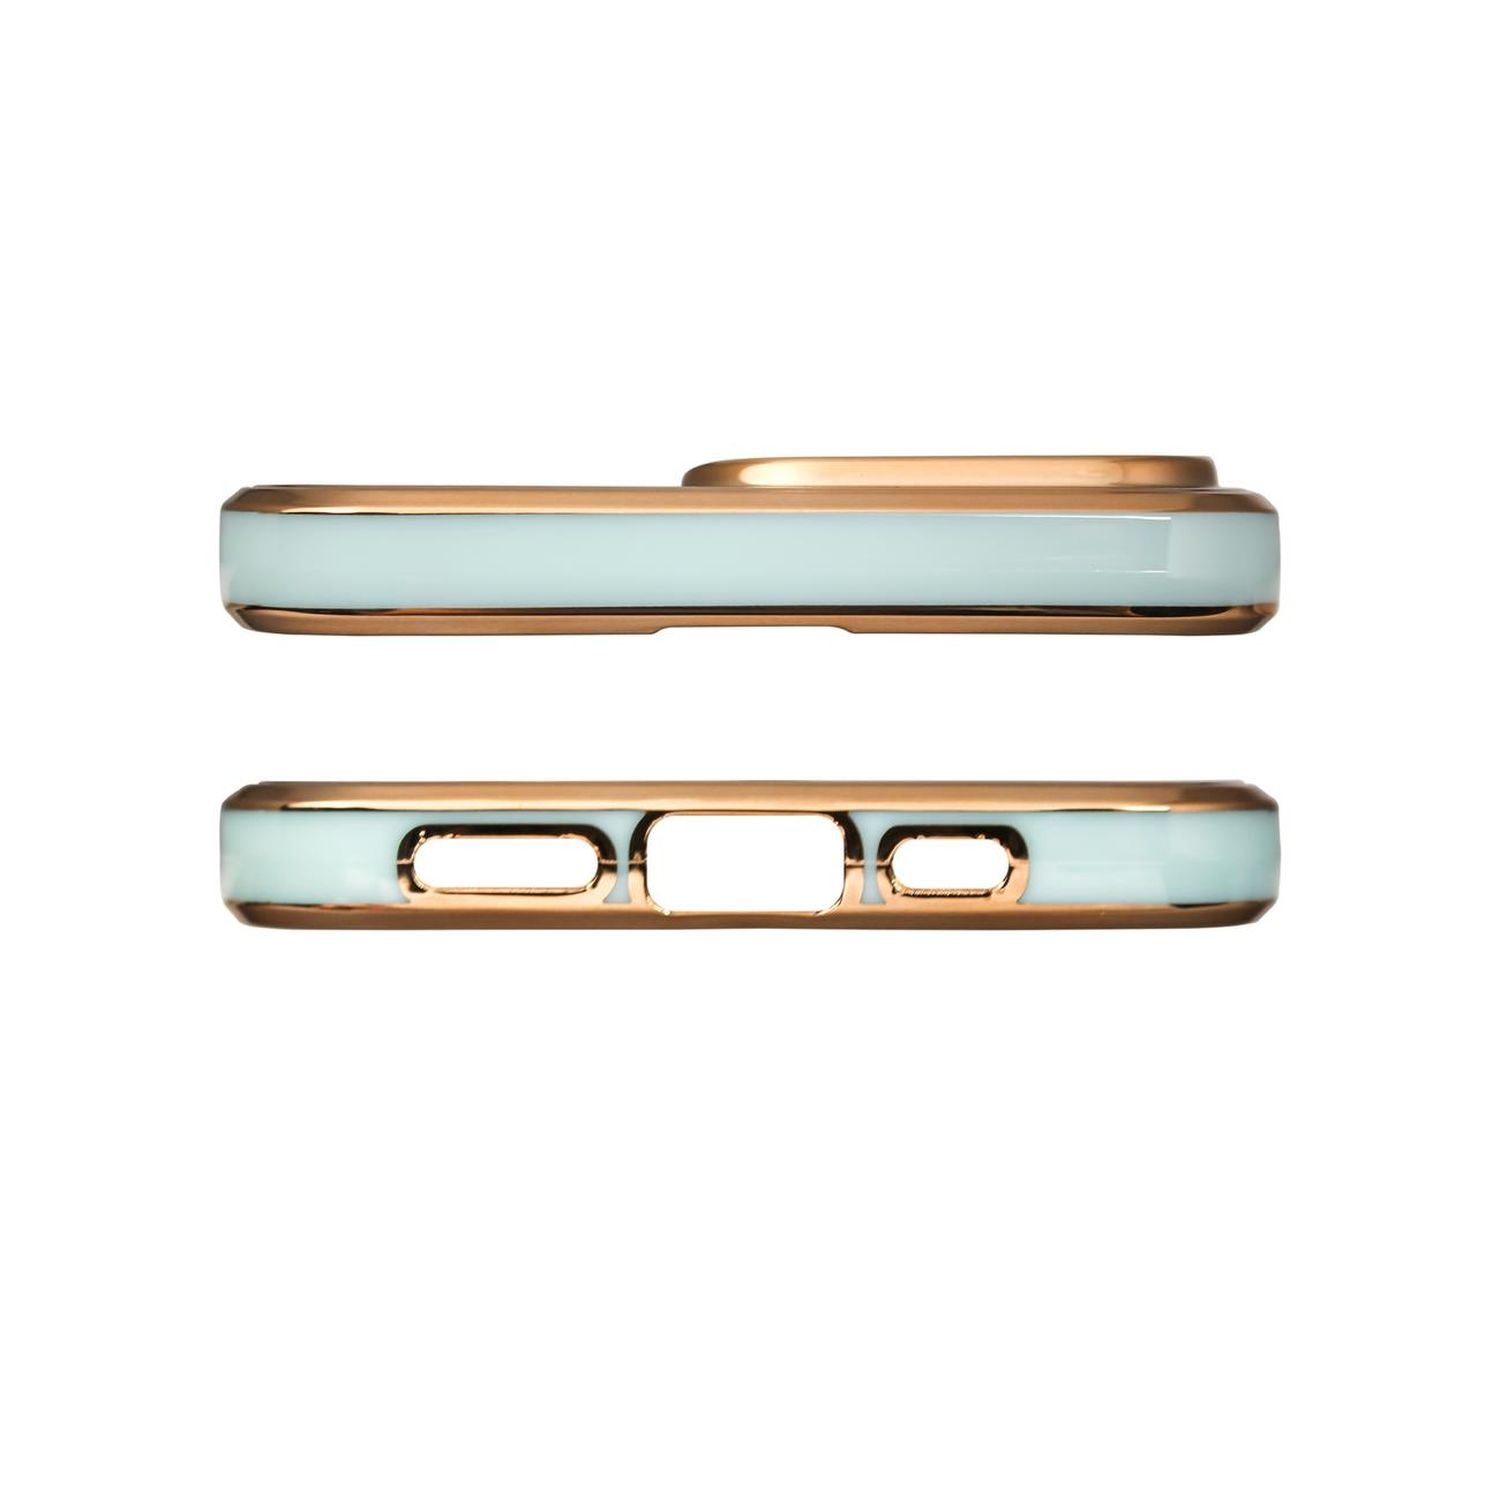 Color 13 Apple, Backcover, Mintgrün-Gold COFI Max, iPhone Pro Lighting Case,